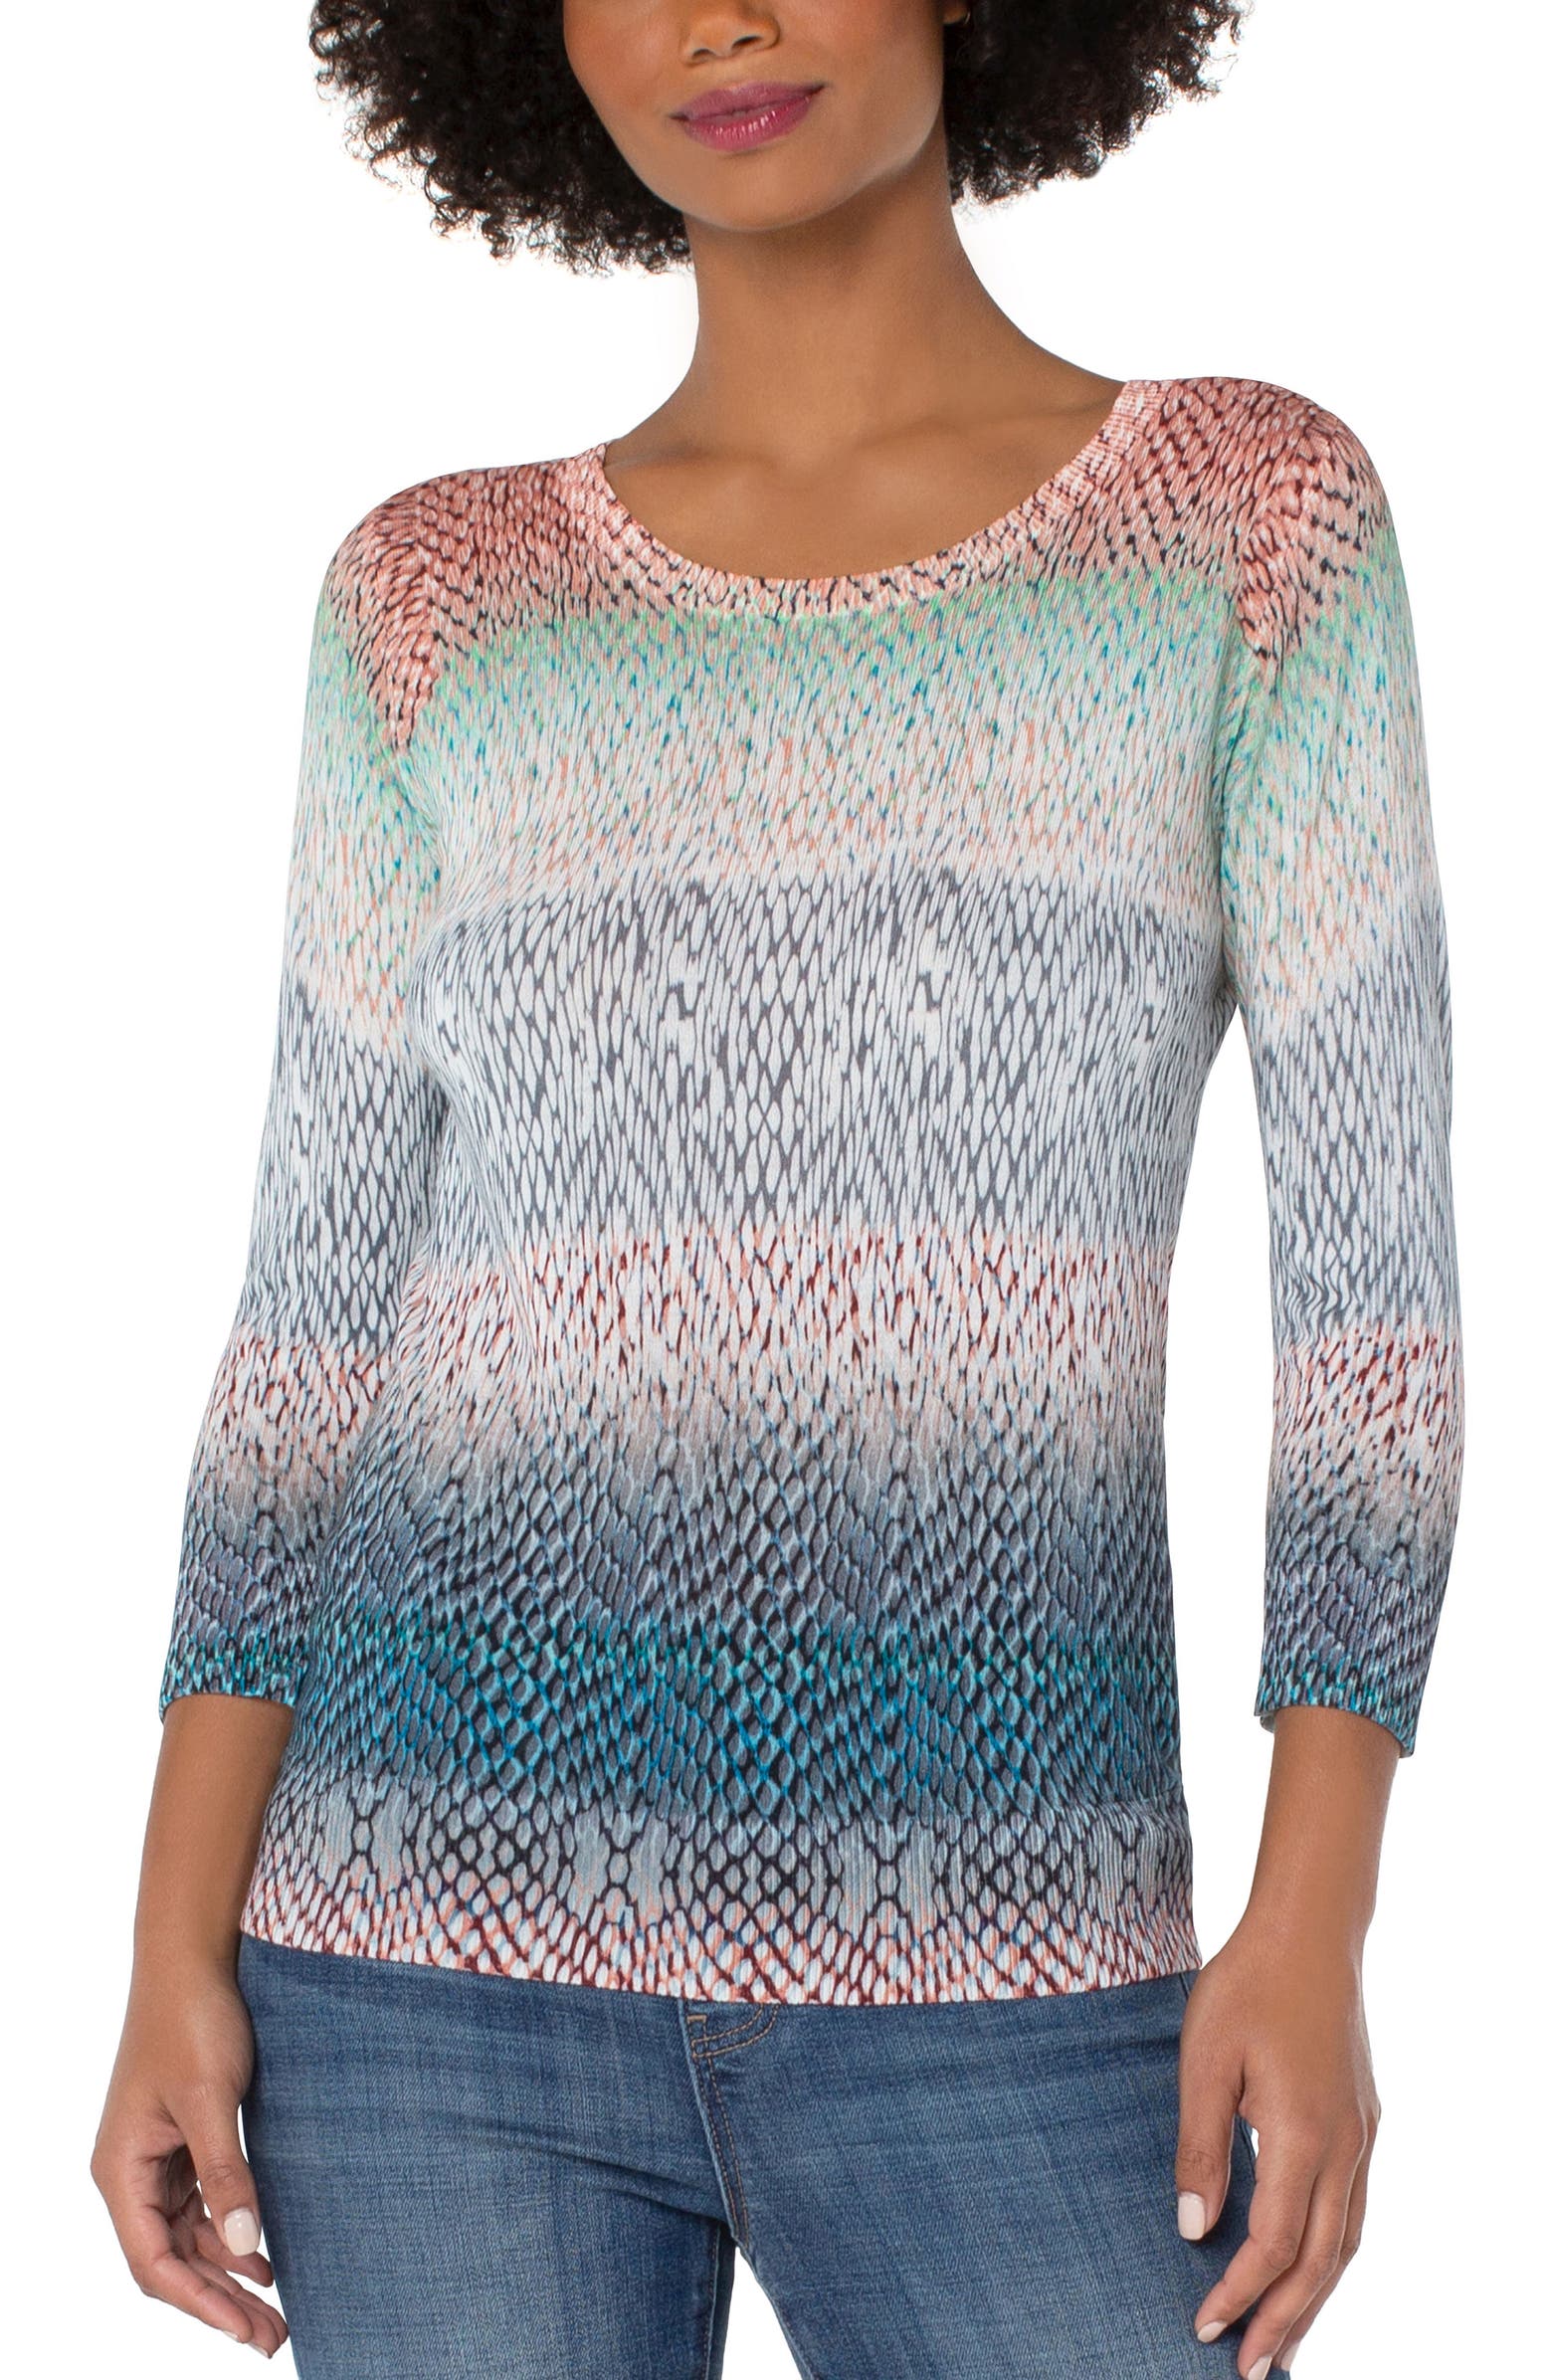 3/4 Sleeve Sweater - Ombre Snakeskin Print - SALE